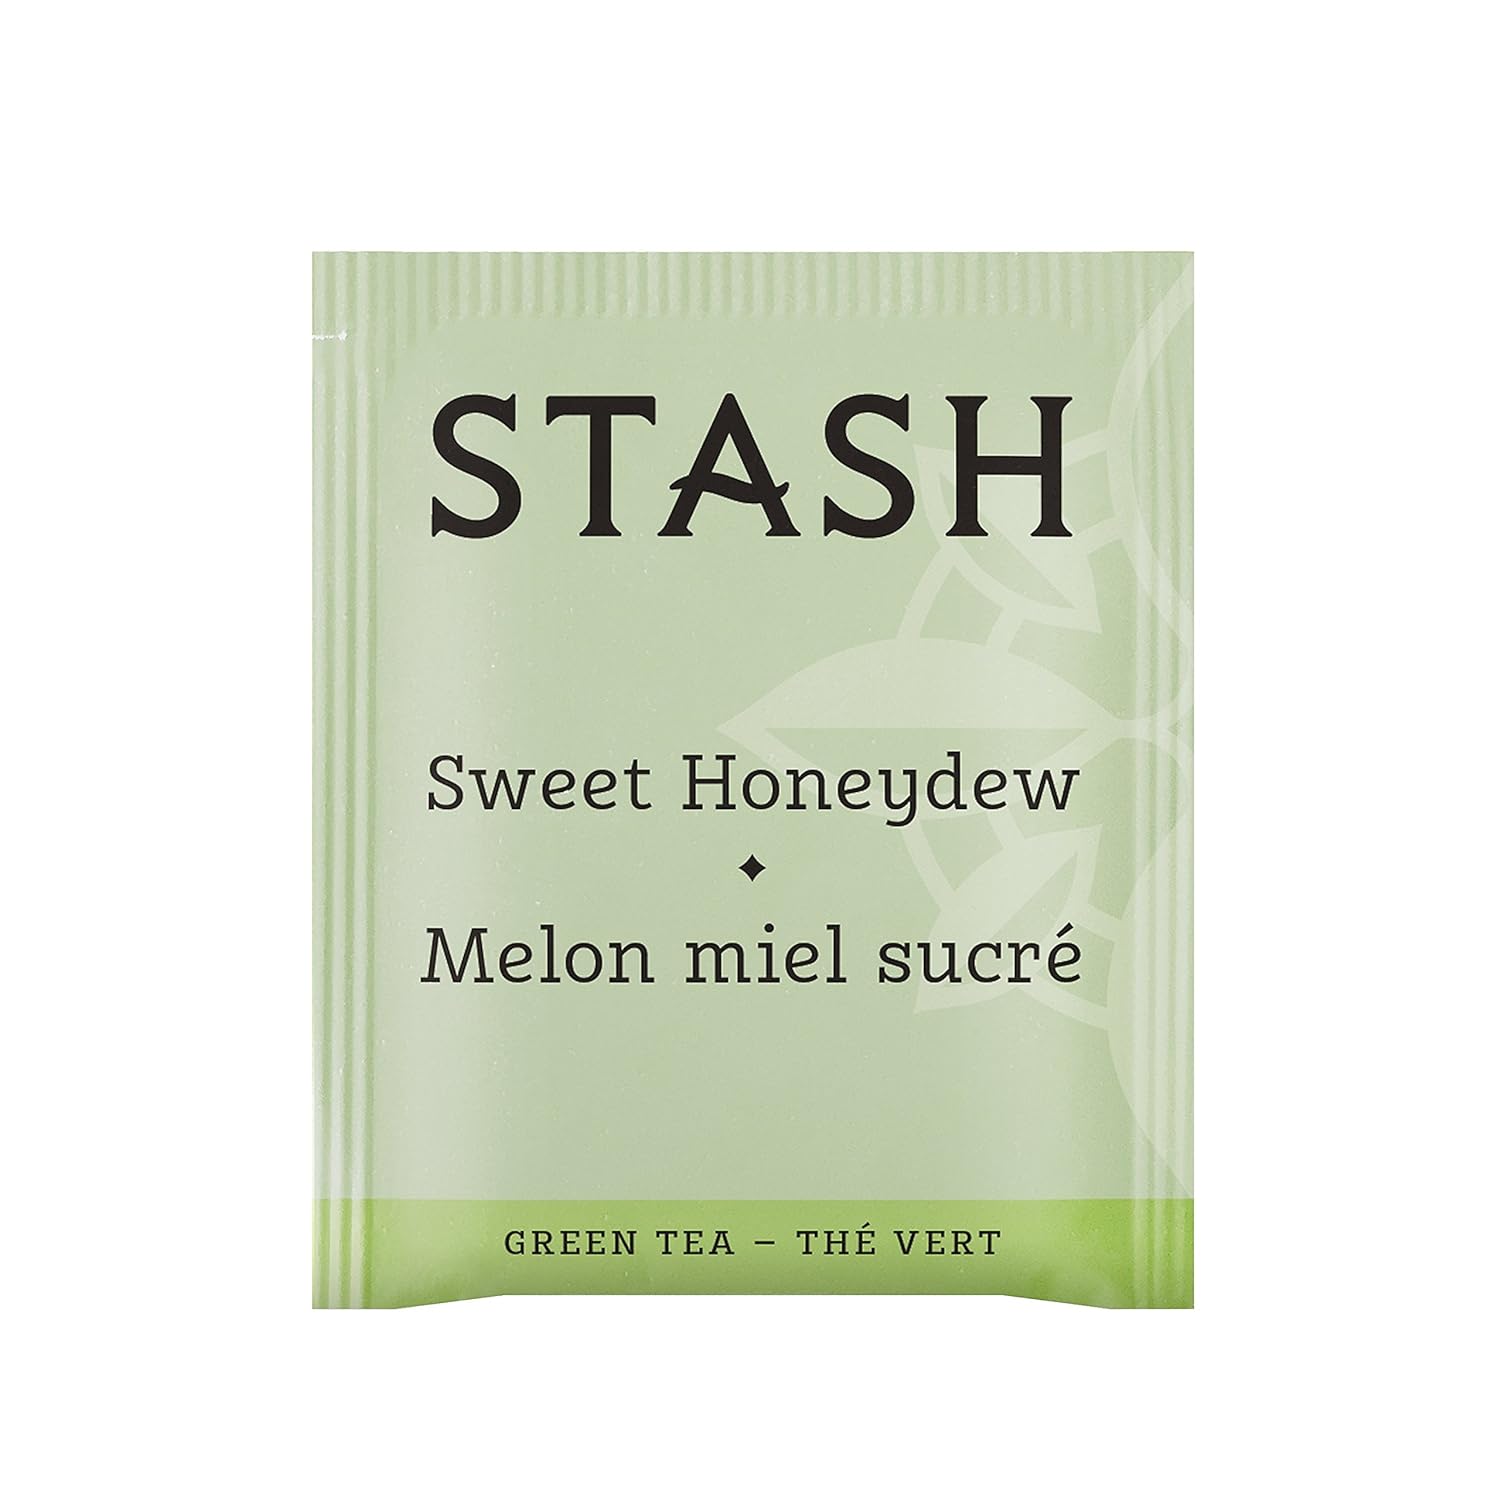 Stash Sweet Honeydew Green Tea